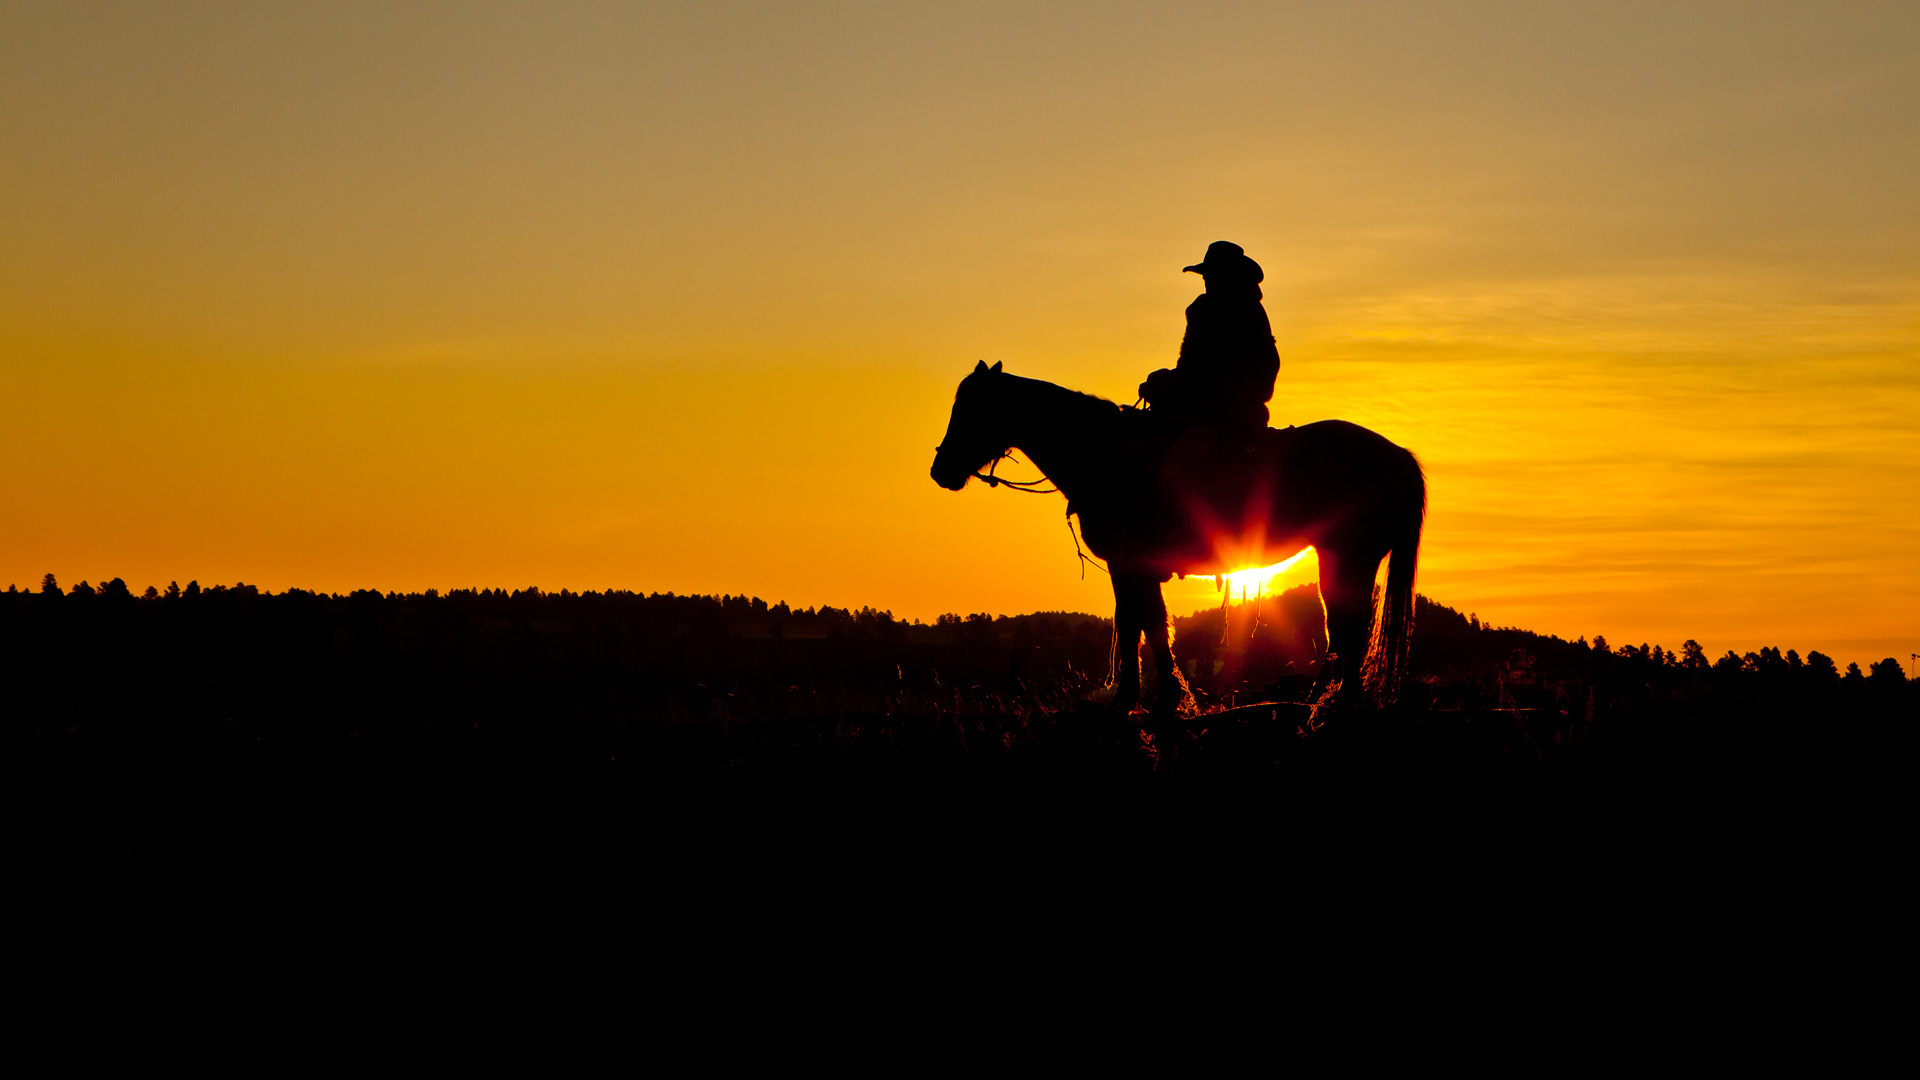 cowboy wallpaper hd,cavallo,cielo,tramonto,alba,silhouette